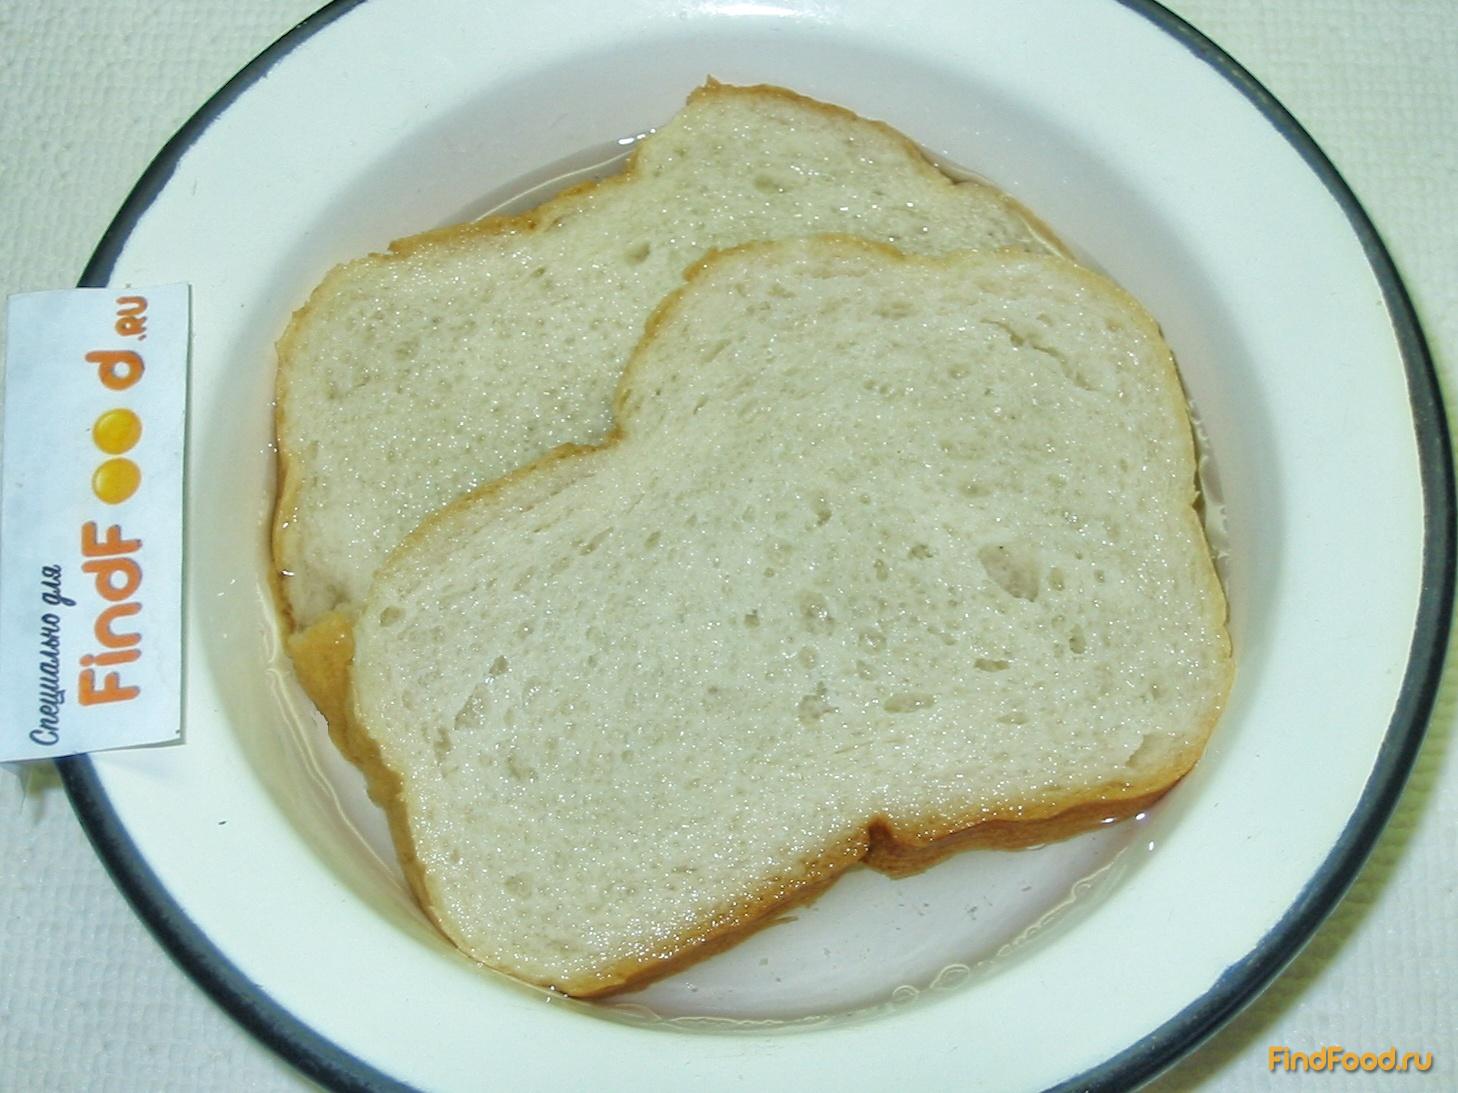 Мясной хлеб с перцем рецепт с фото 1-го шага 